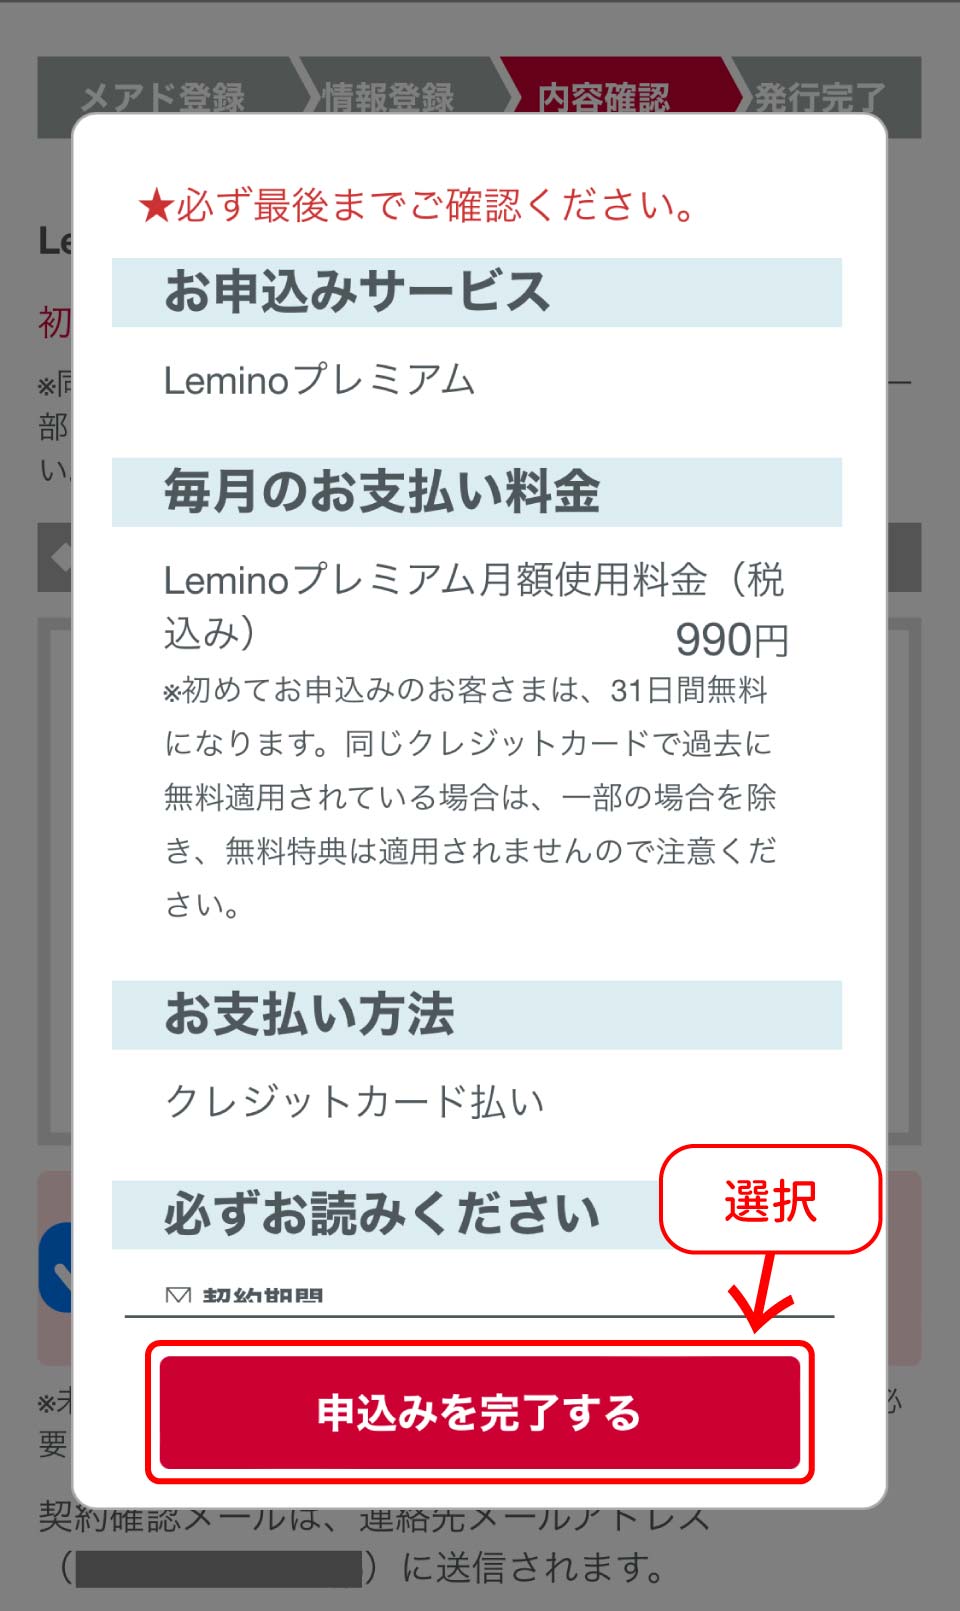 Lemino登録方法